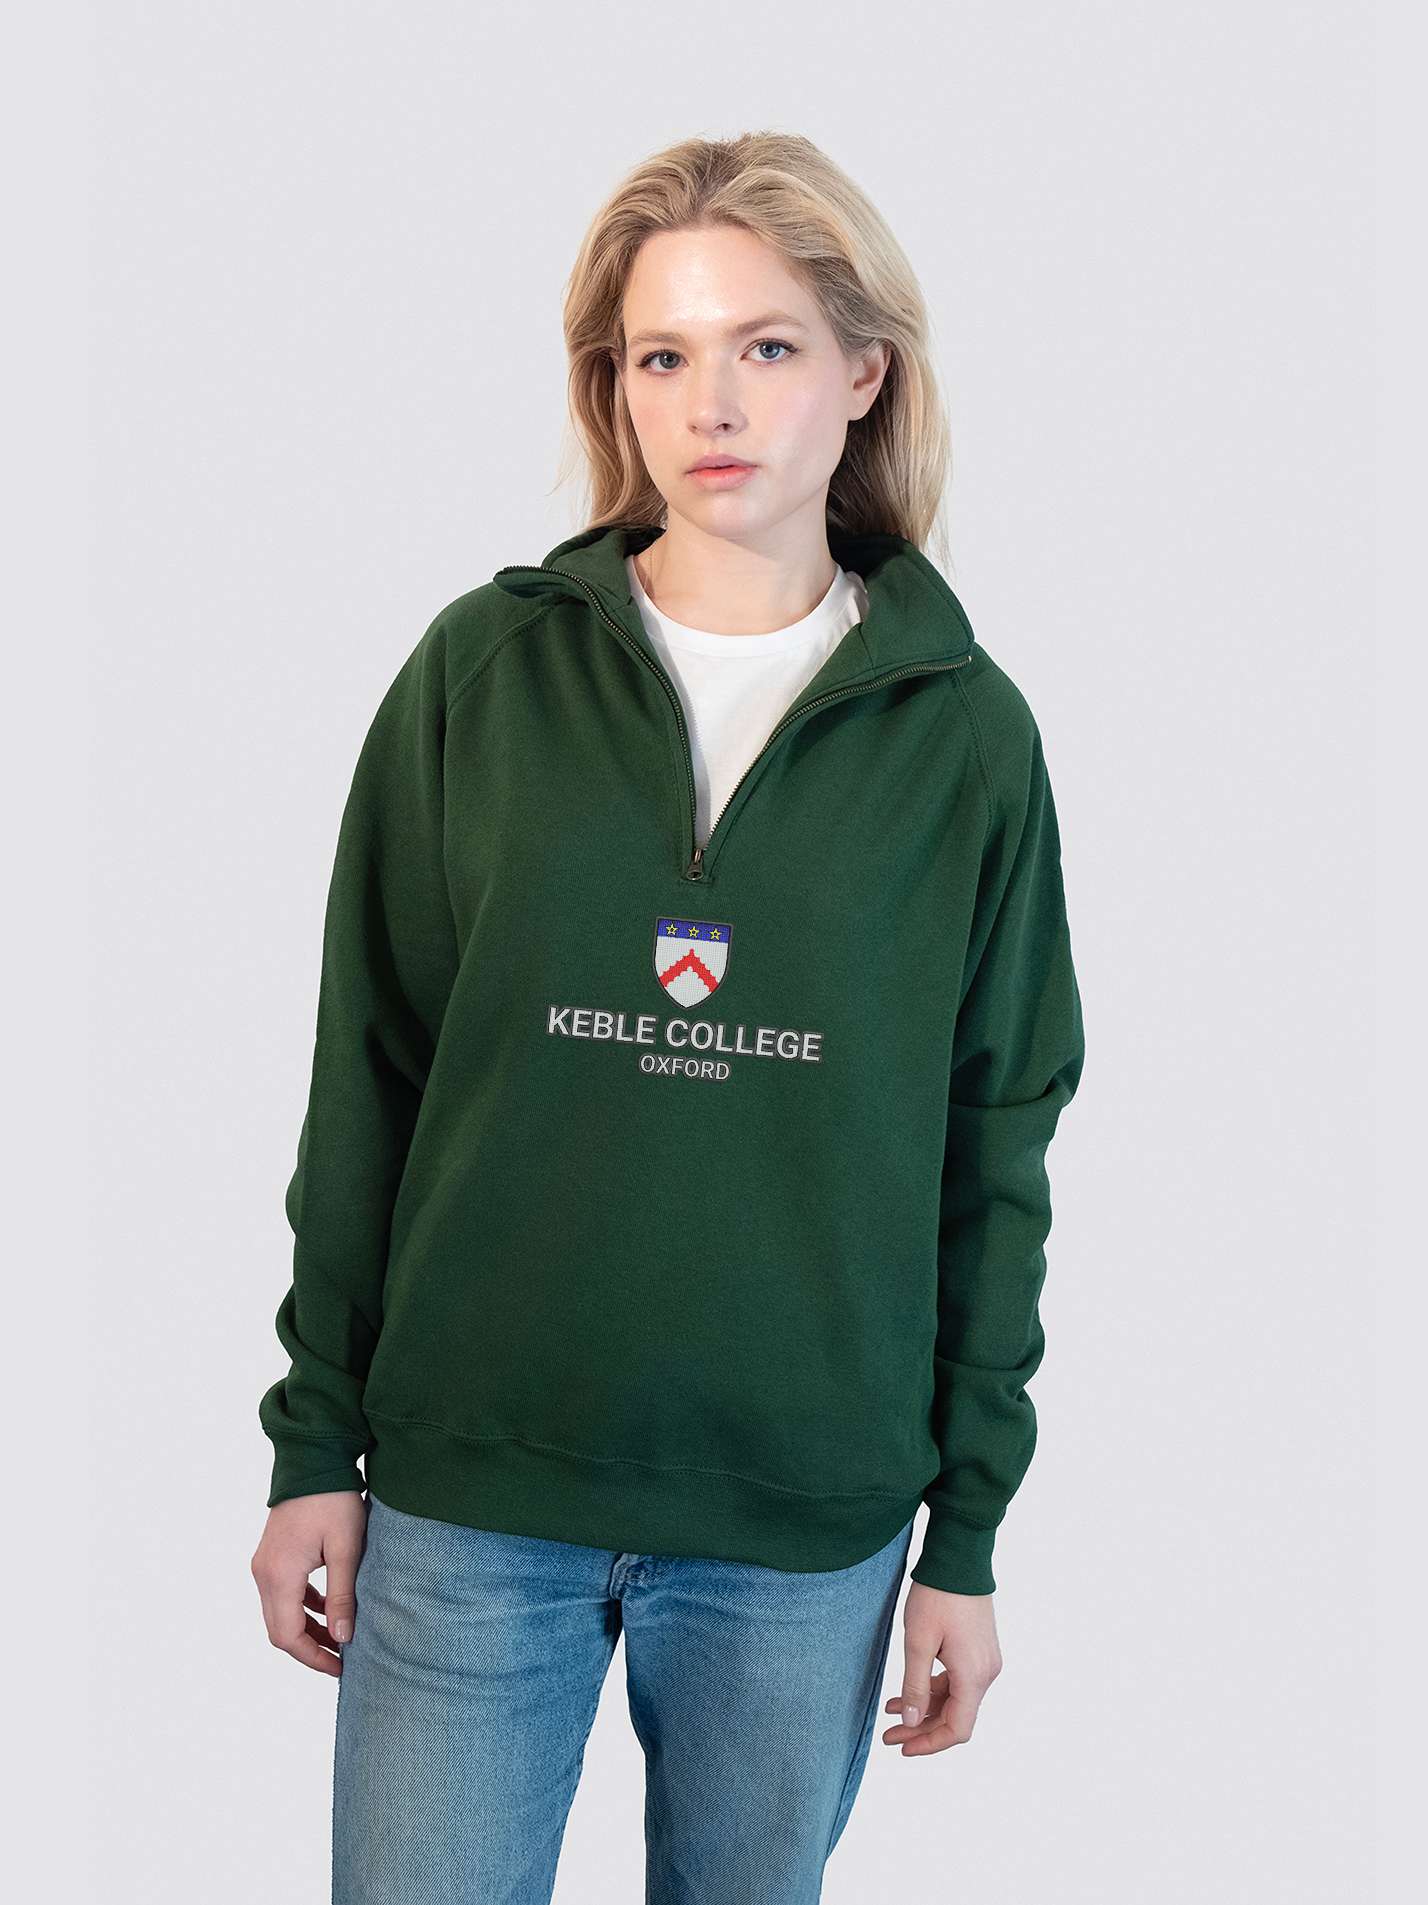 Keble College Oxford JCR Heritage Unisex 1/4 Zip Sweatshirt